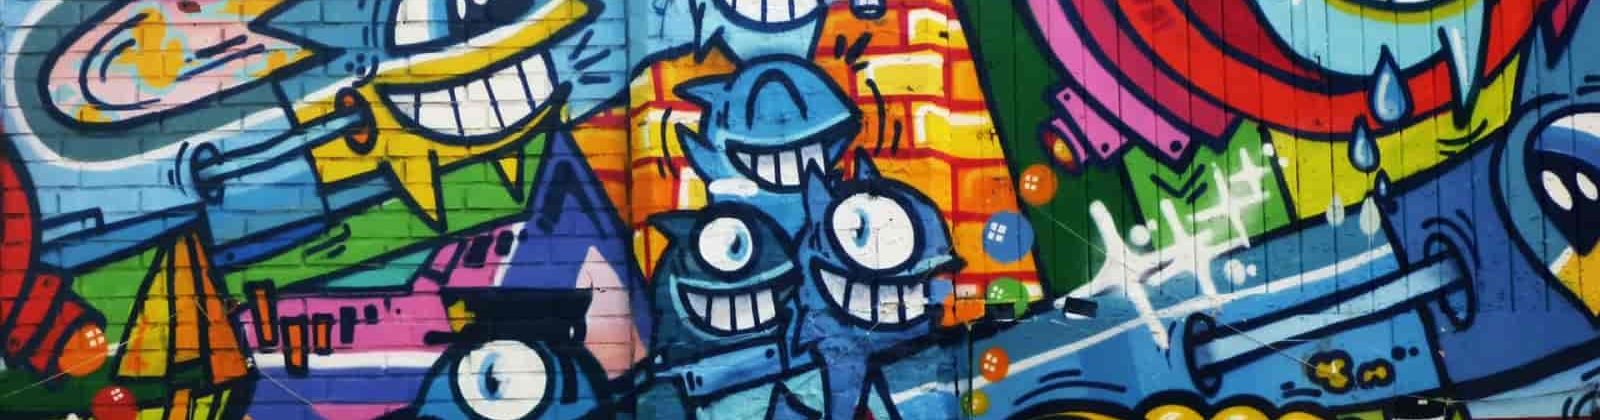 oslo graffiti wall